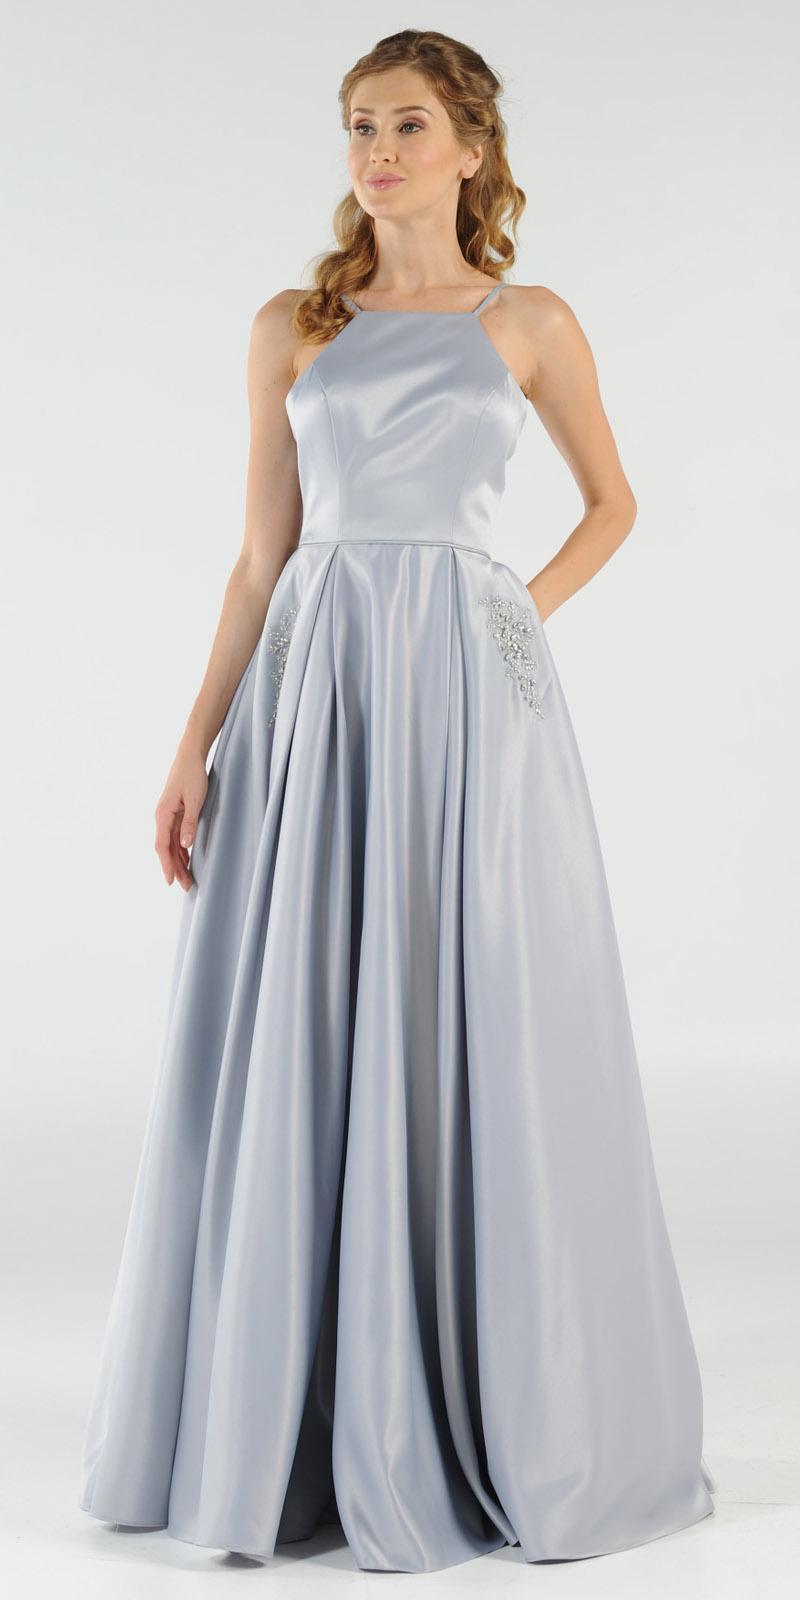 silver halter prom dress